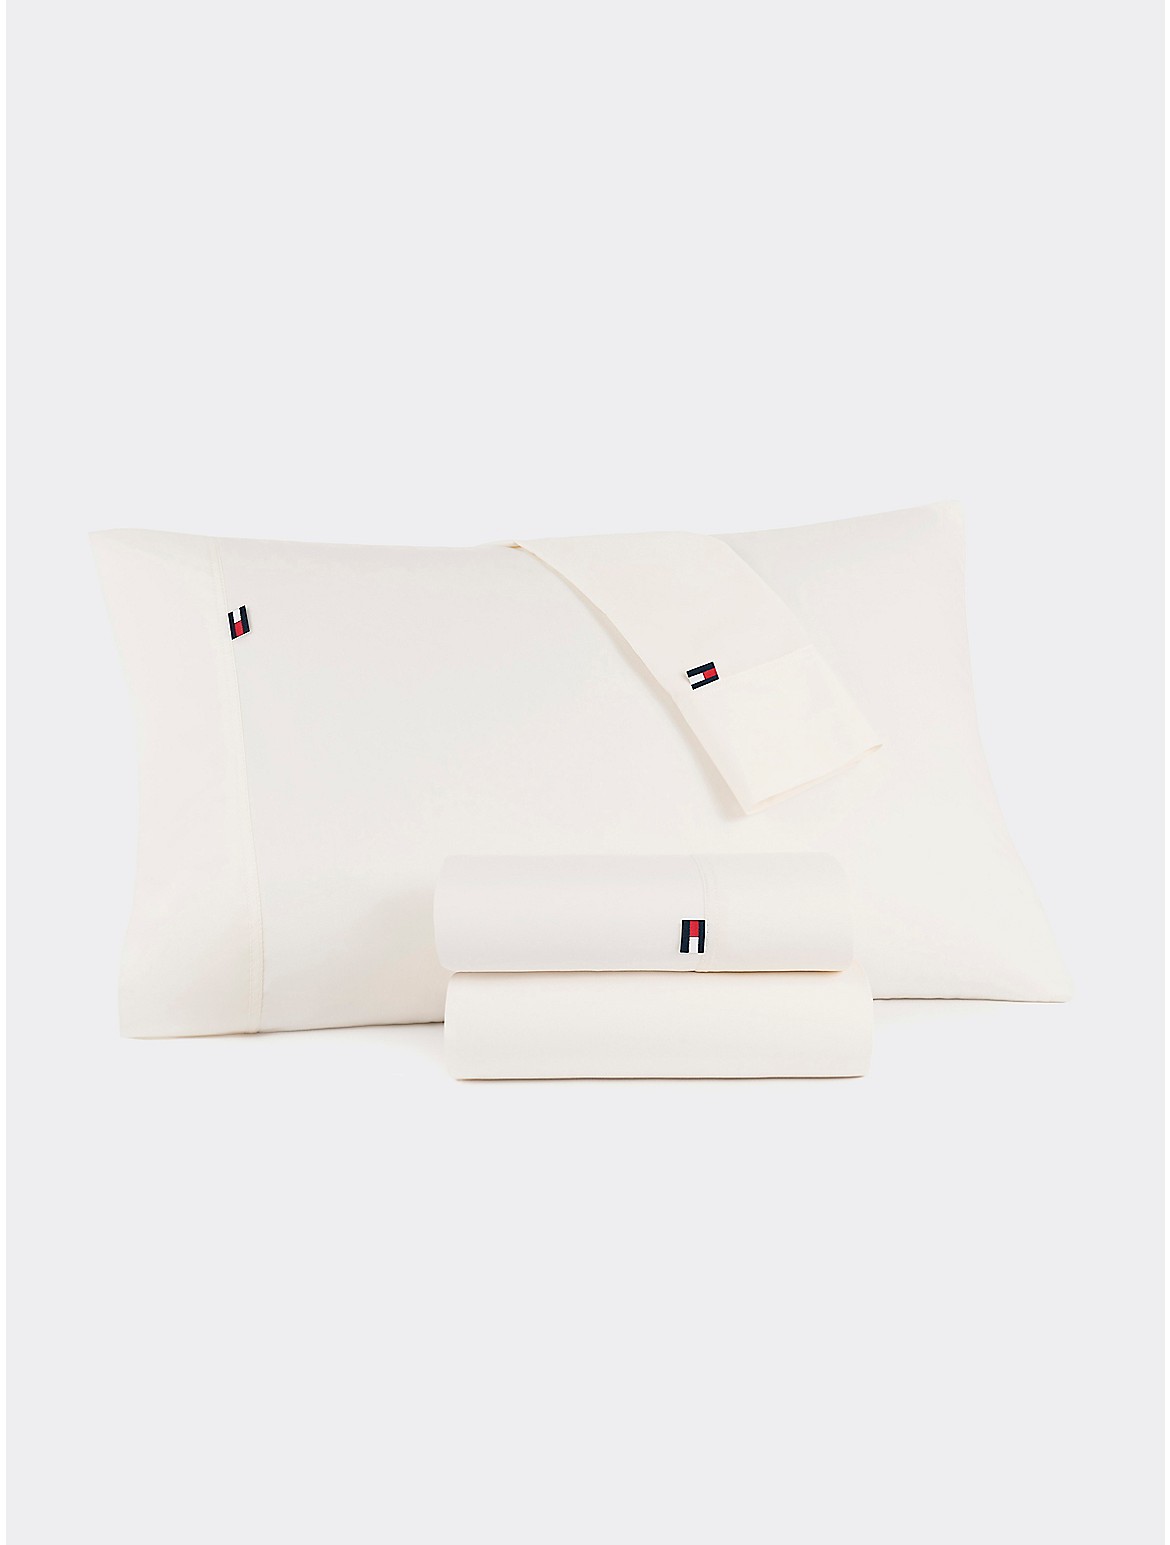 Tommy Hilfiger Signature Solid Light Beige Sheet Set - White - FULL